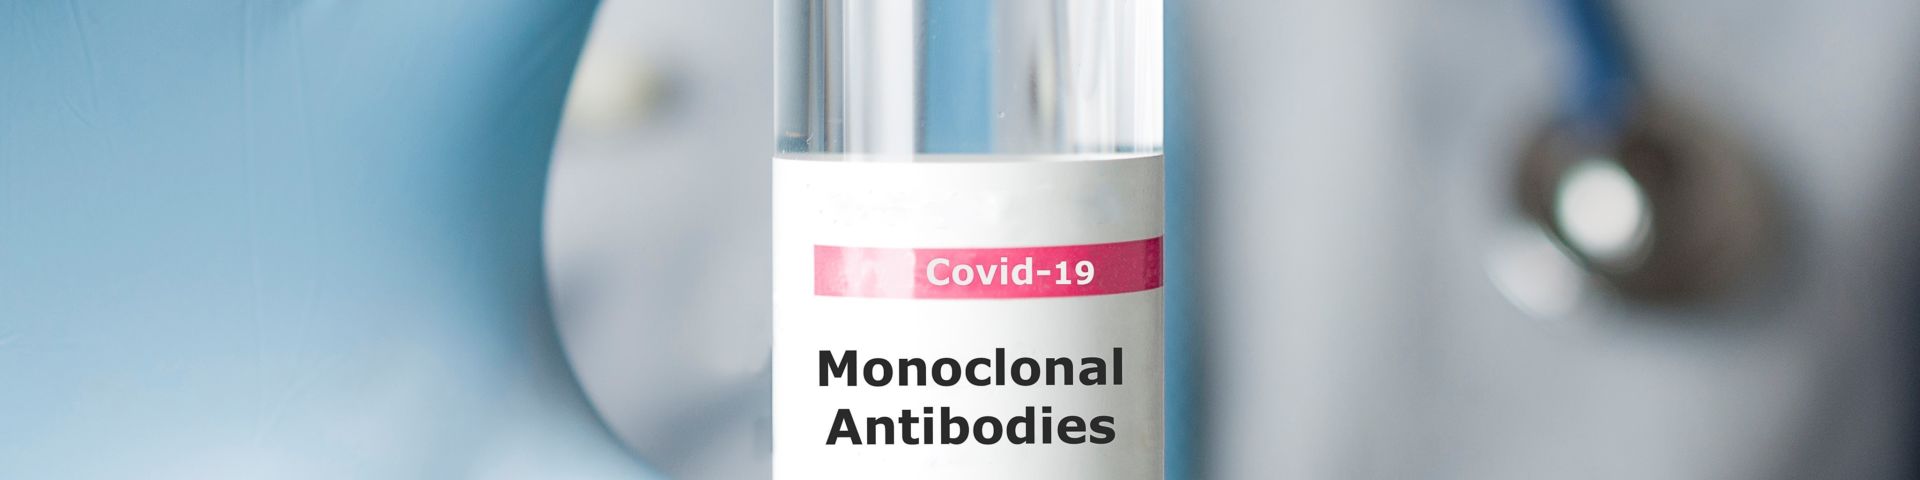 Monoclonal antibodies